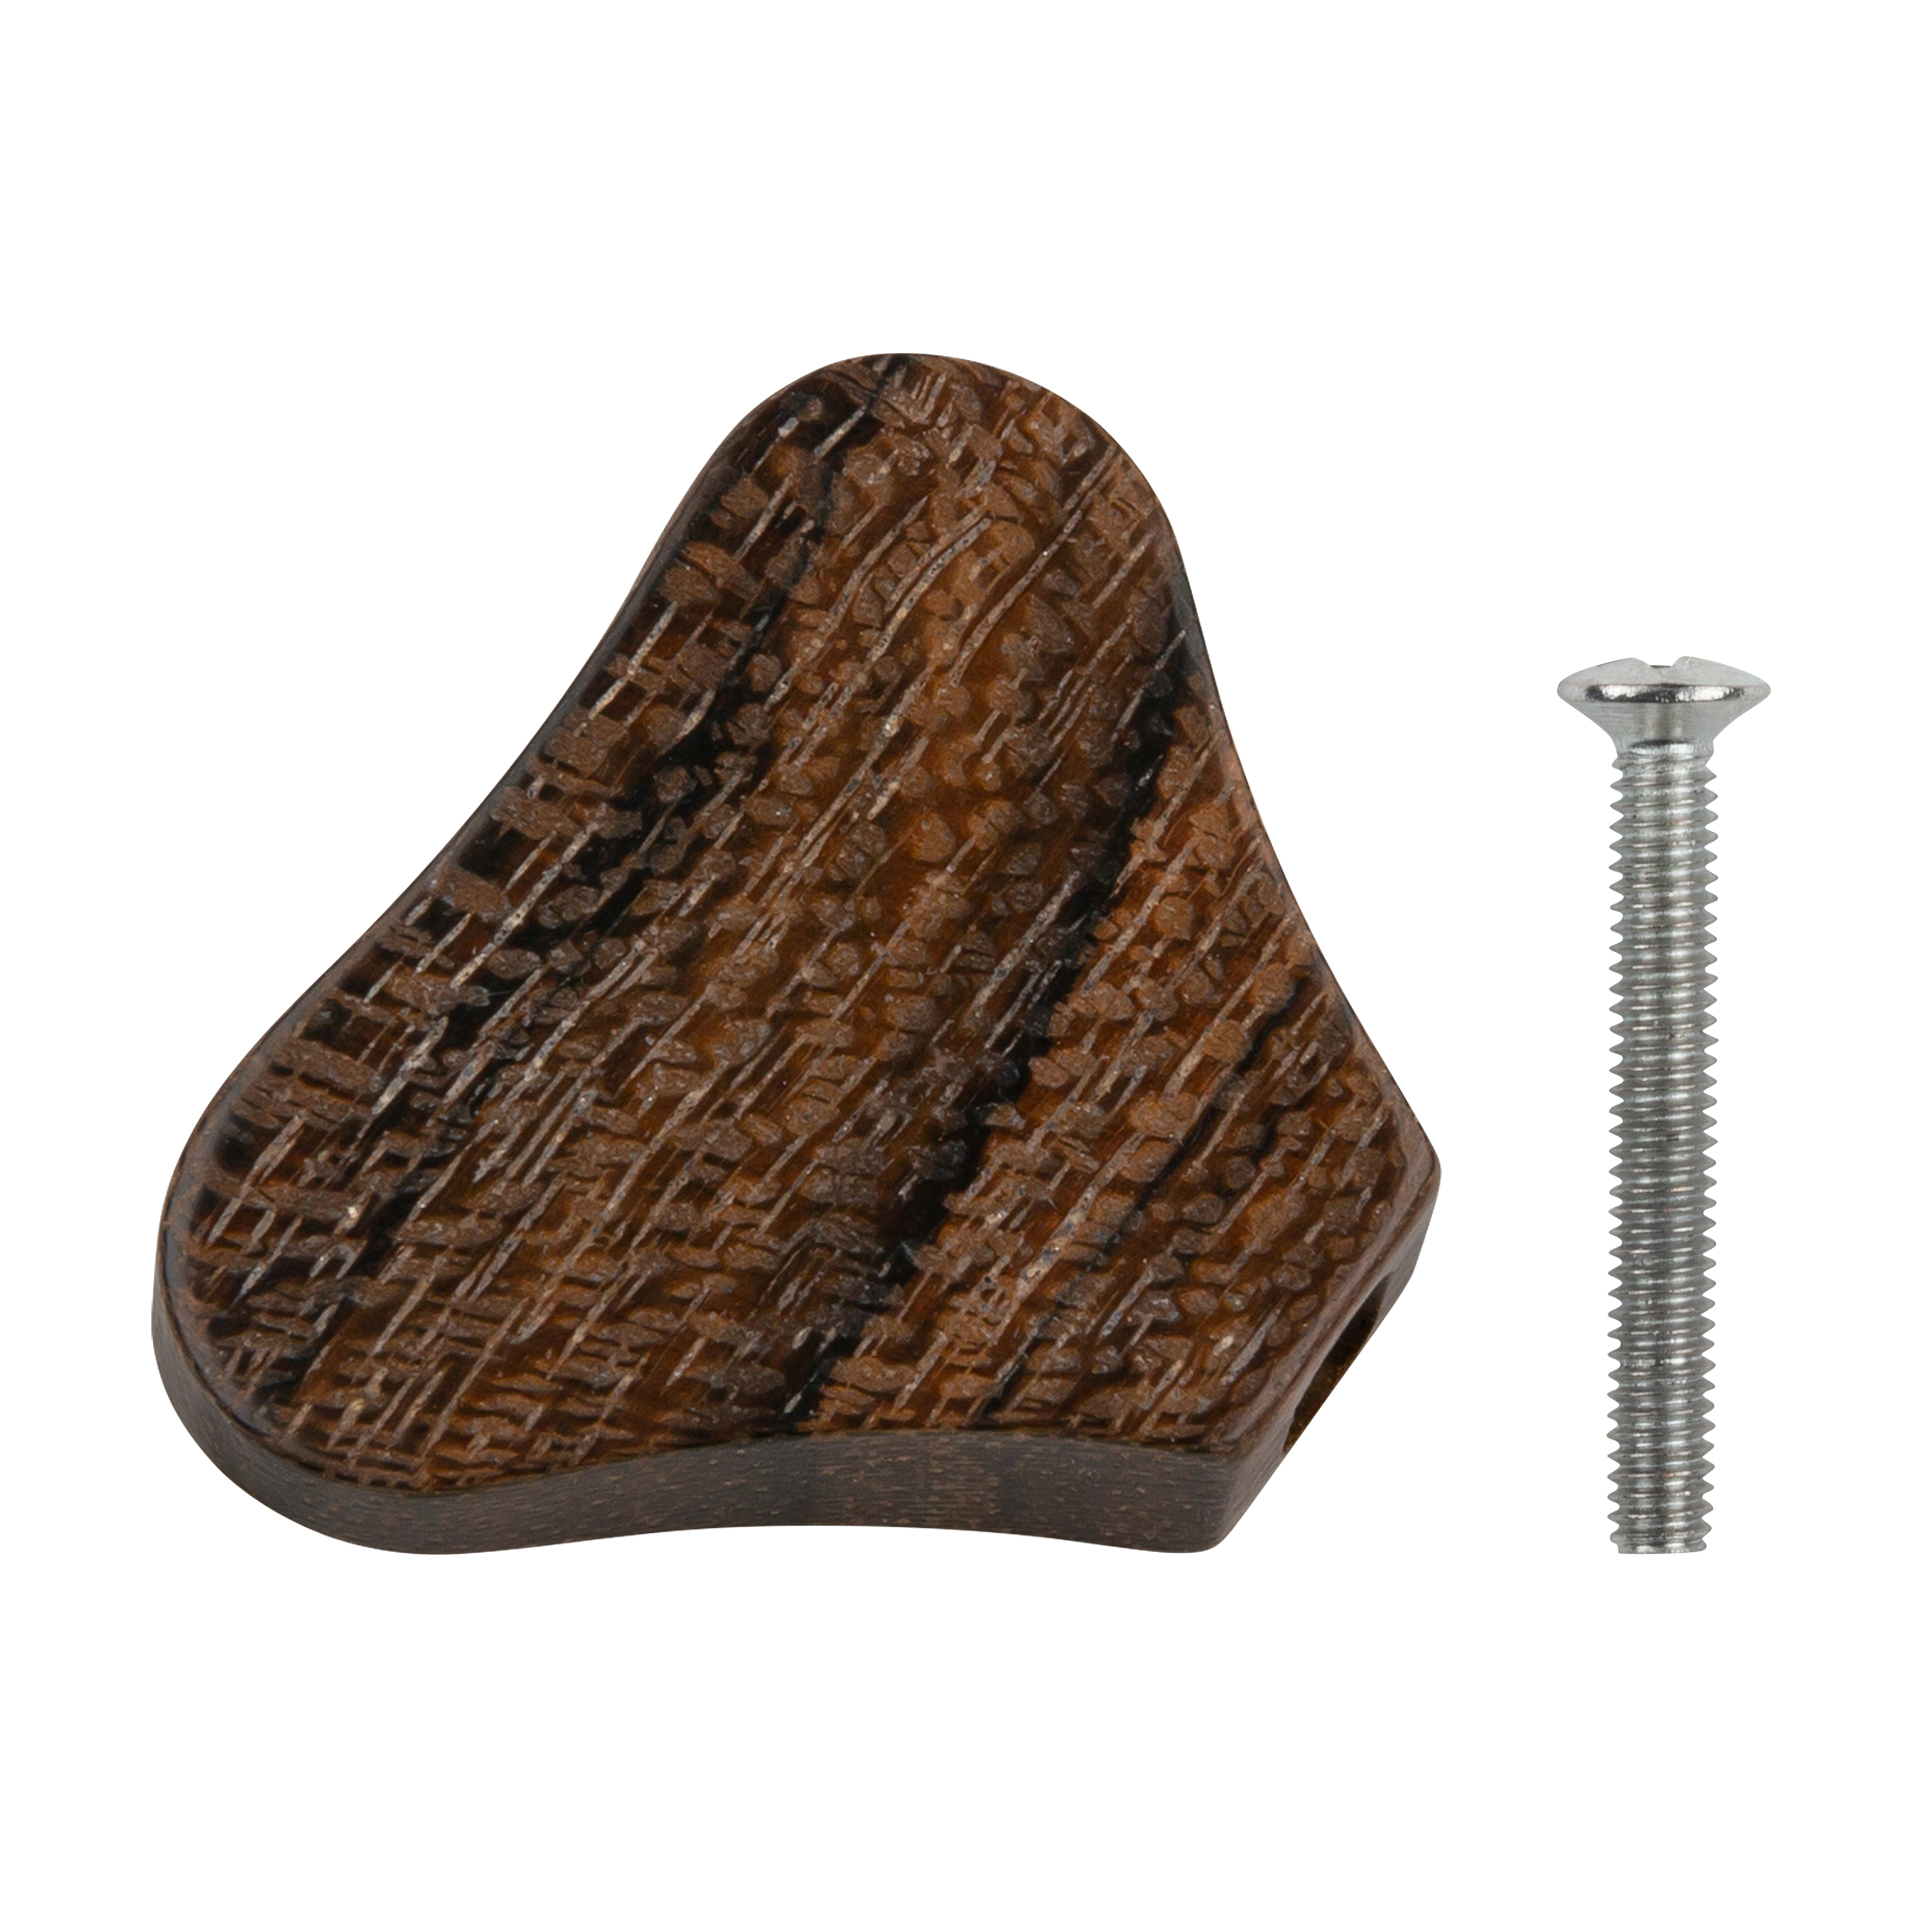 Warwick Parts - Wooden Peg for Warwick Machine Heads - Ziricote (with Chrome Screw)